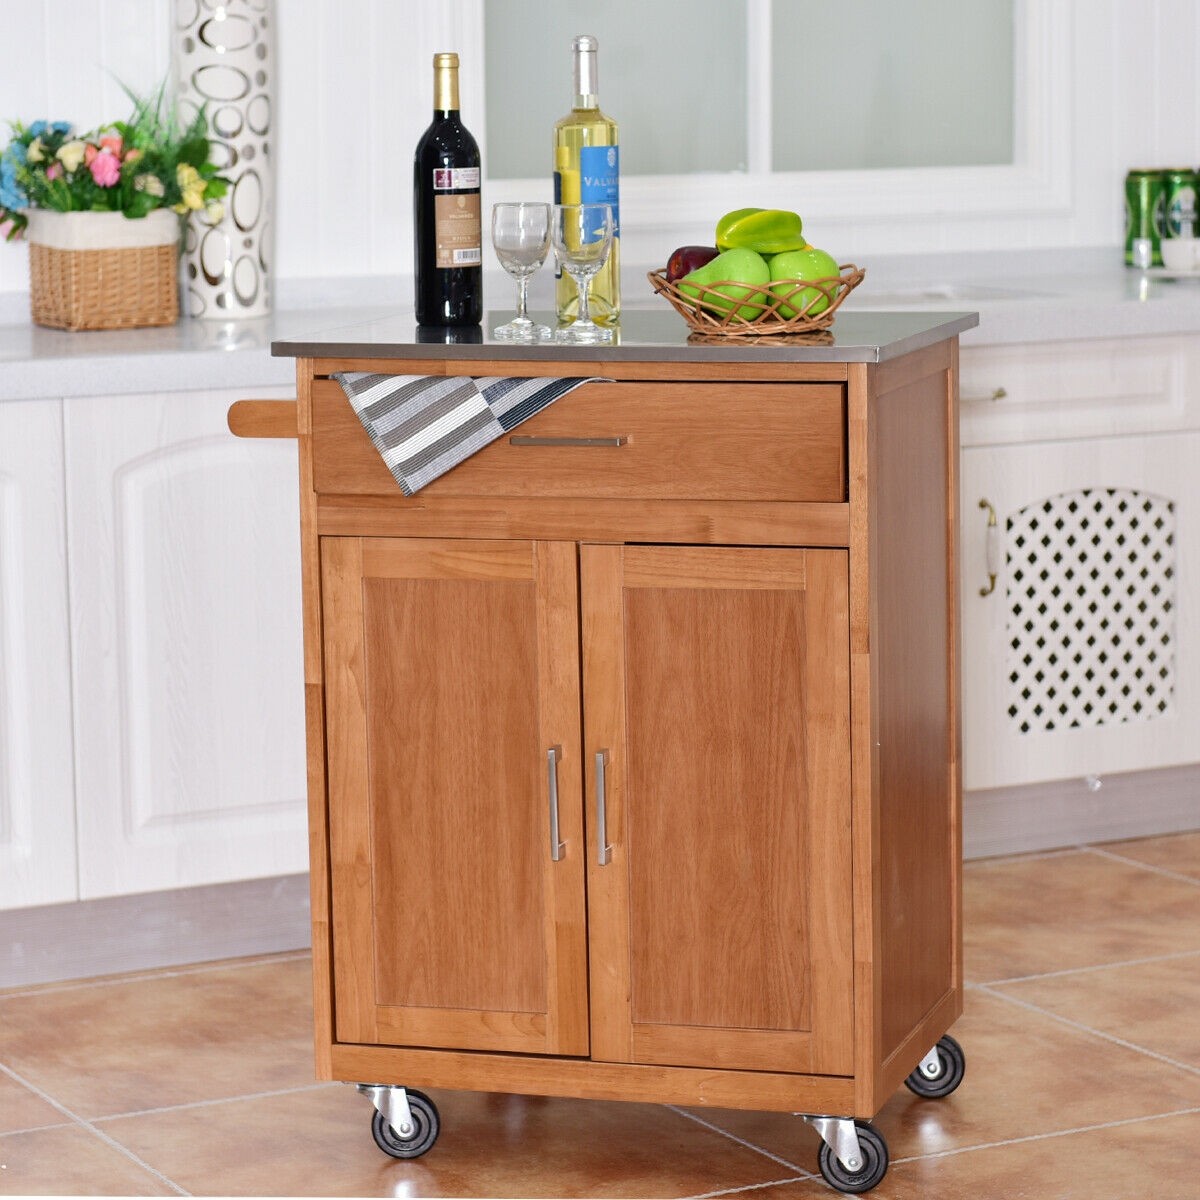 Minimalist Kitchen Storage Cabinet Cart with Simple Decor